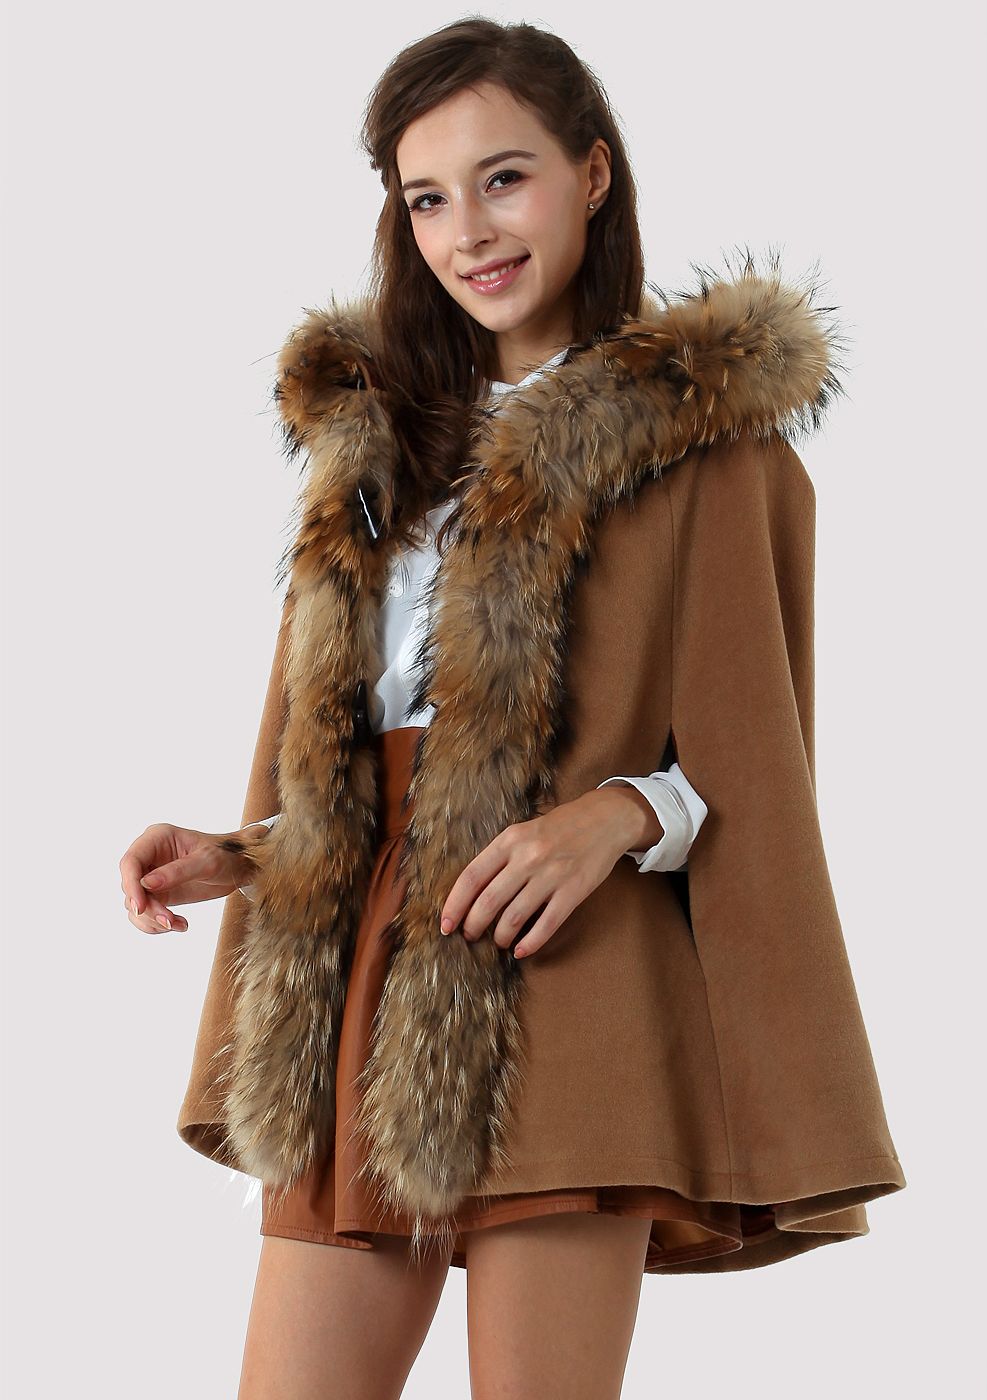 Luxury Khaki Detachable Fur Hooded Cape - Retro, Indie and Unique Fashion